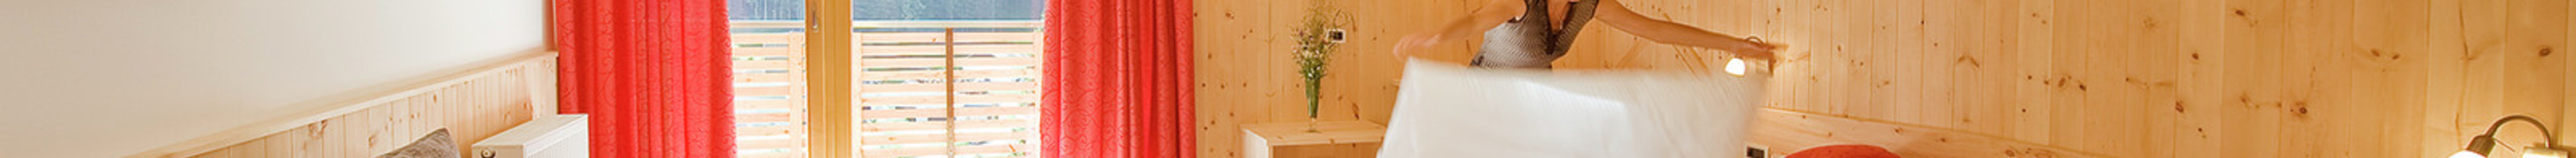 Swiss pine dobble room